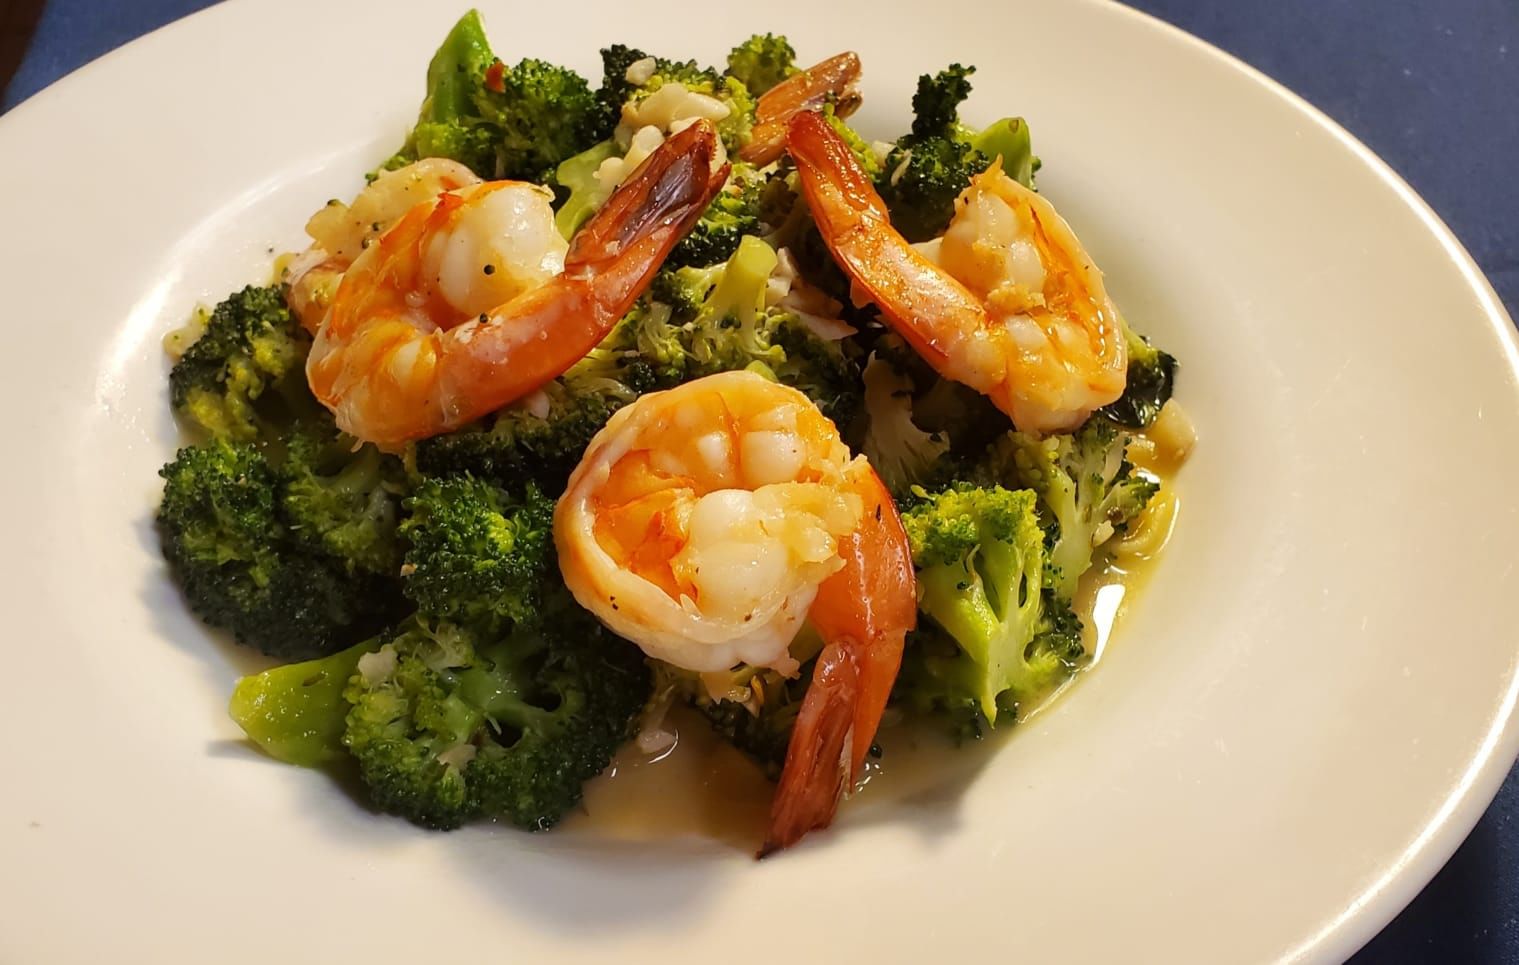 Fettuccine with Shrimp and Broccoli